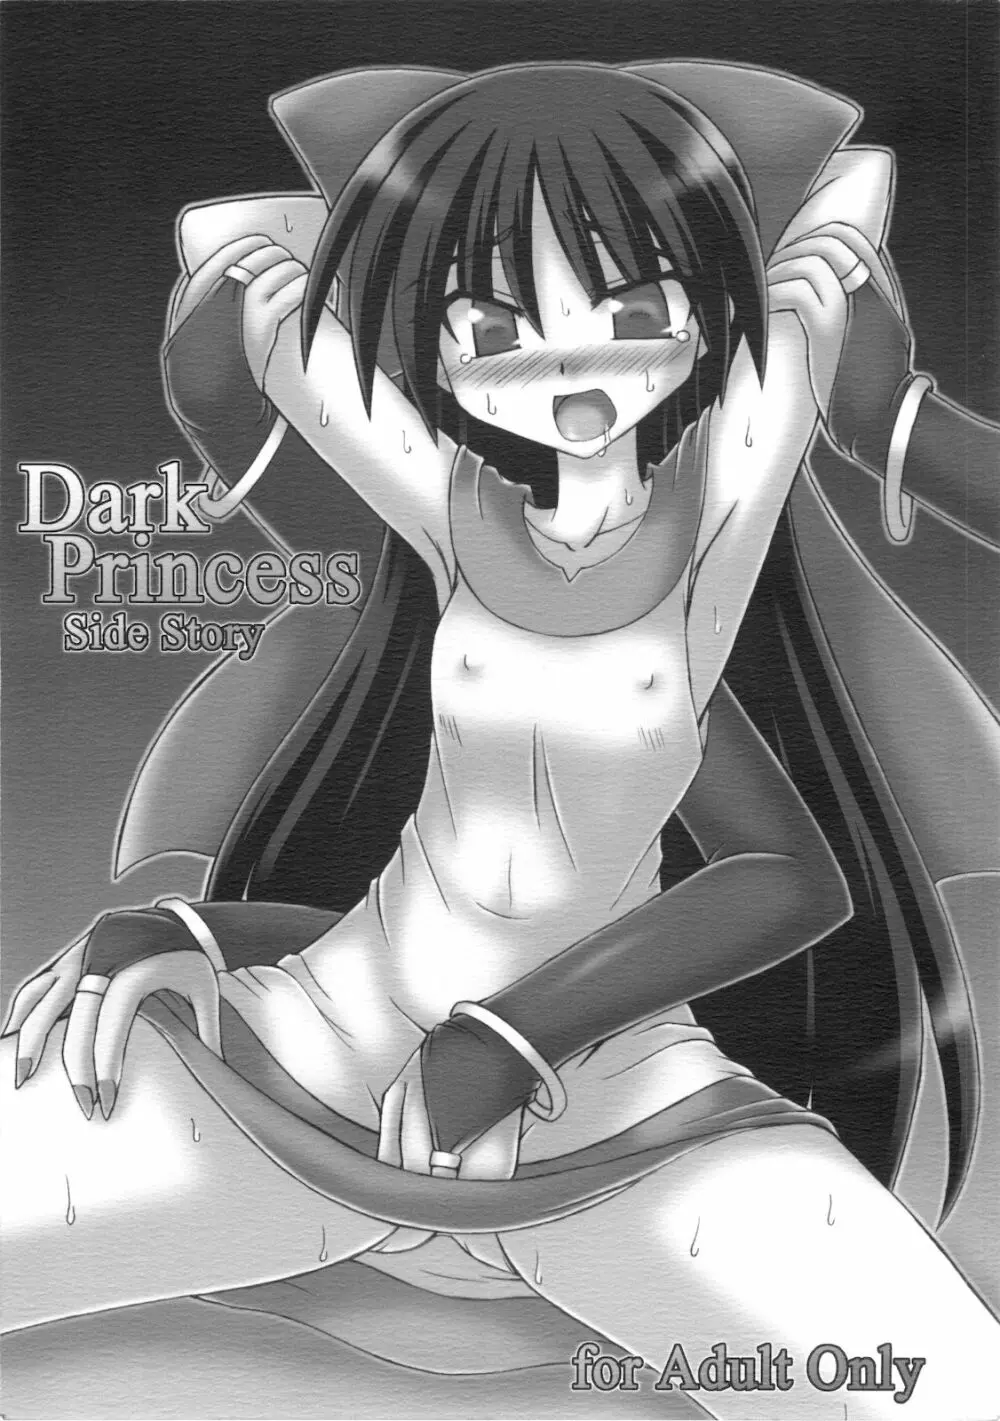 Dark Princess Side Story